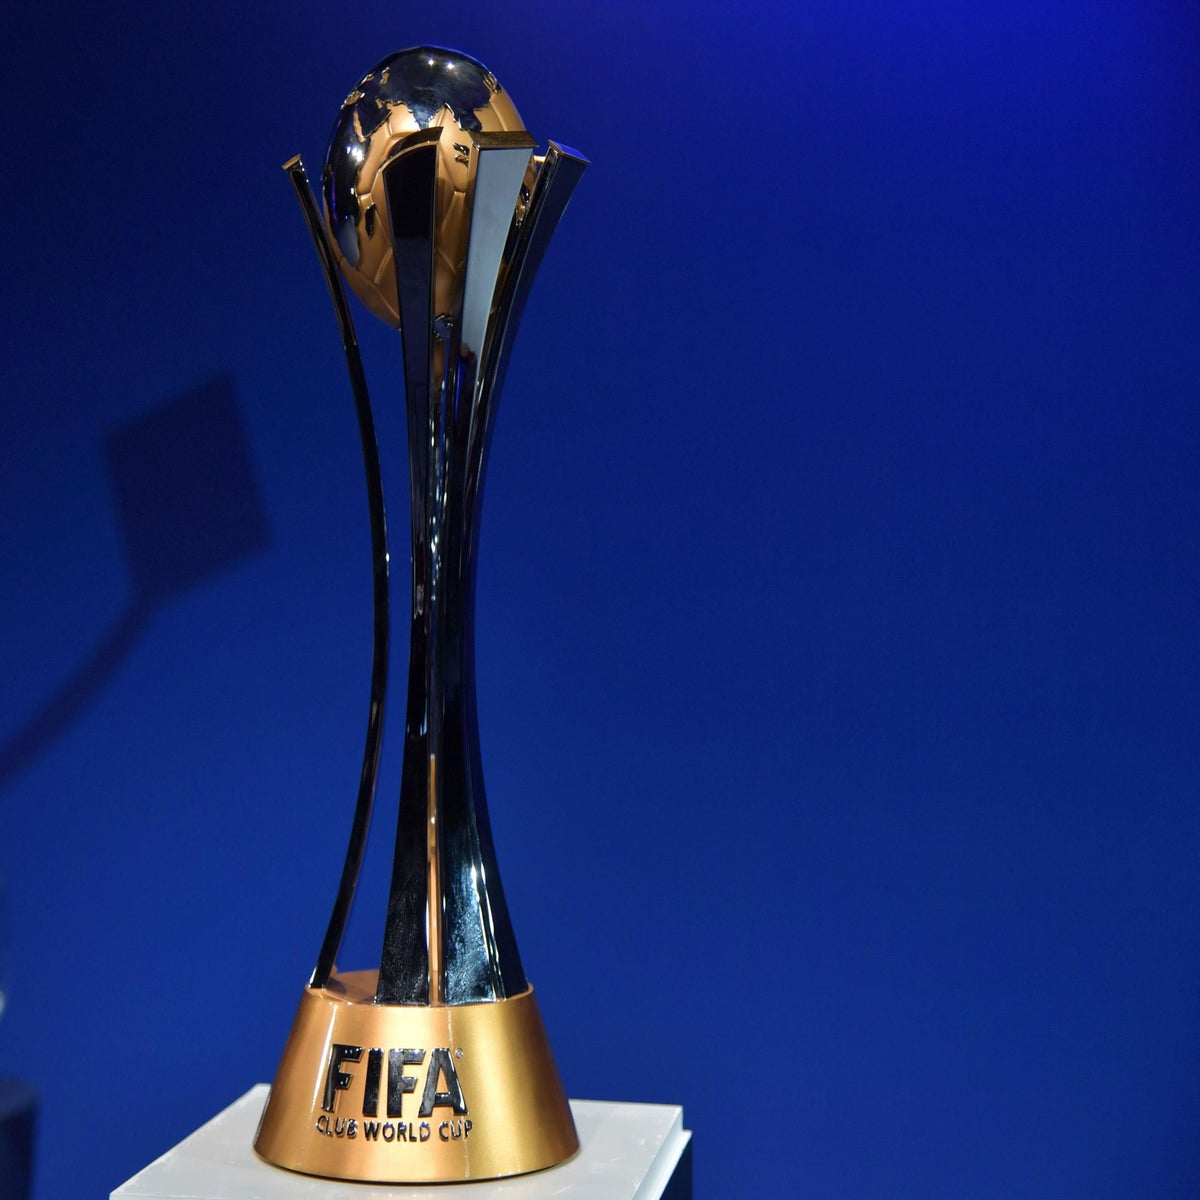 2000 FIFA Club World Championship - Wikipedia